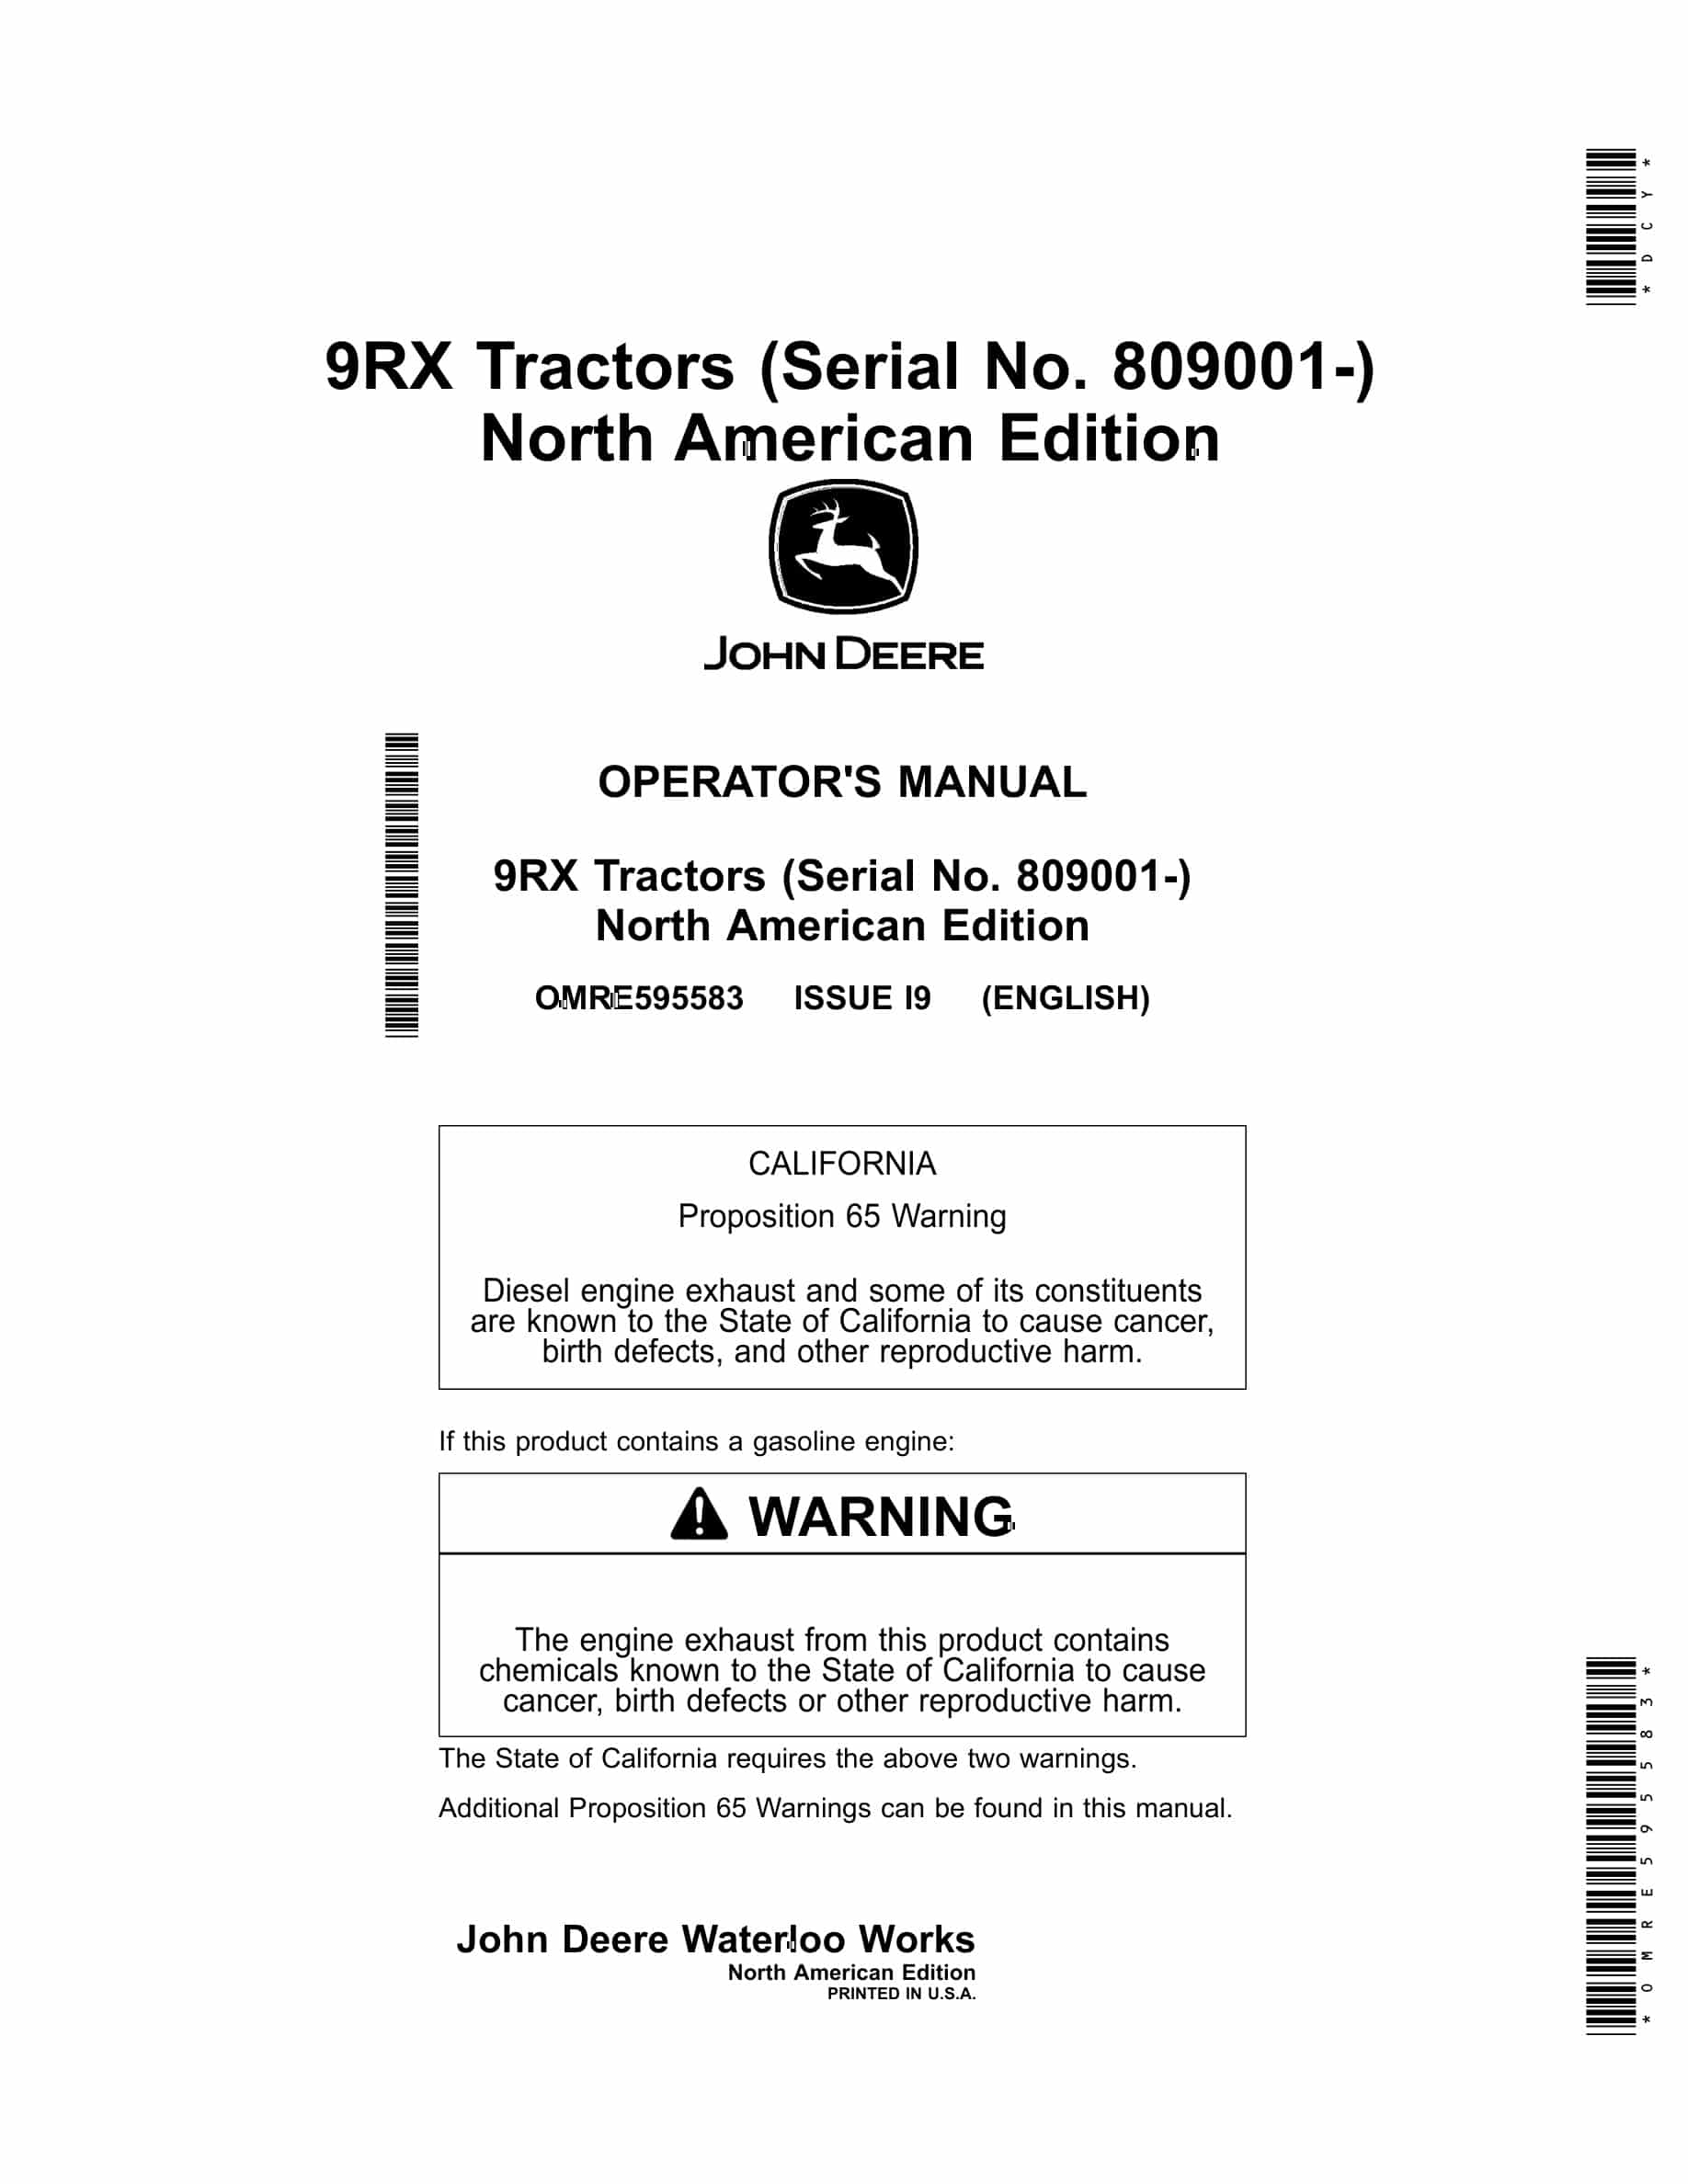 John Deere 9RX Tractor Operator Manual OMRE595583-1